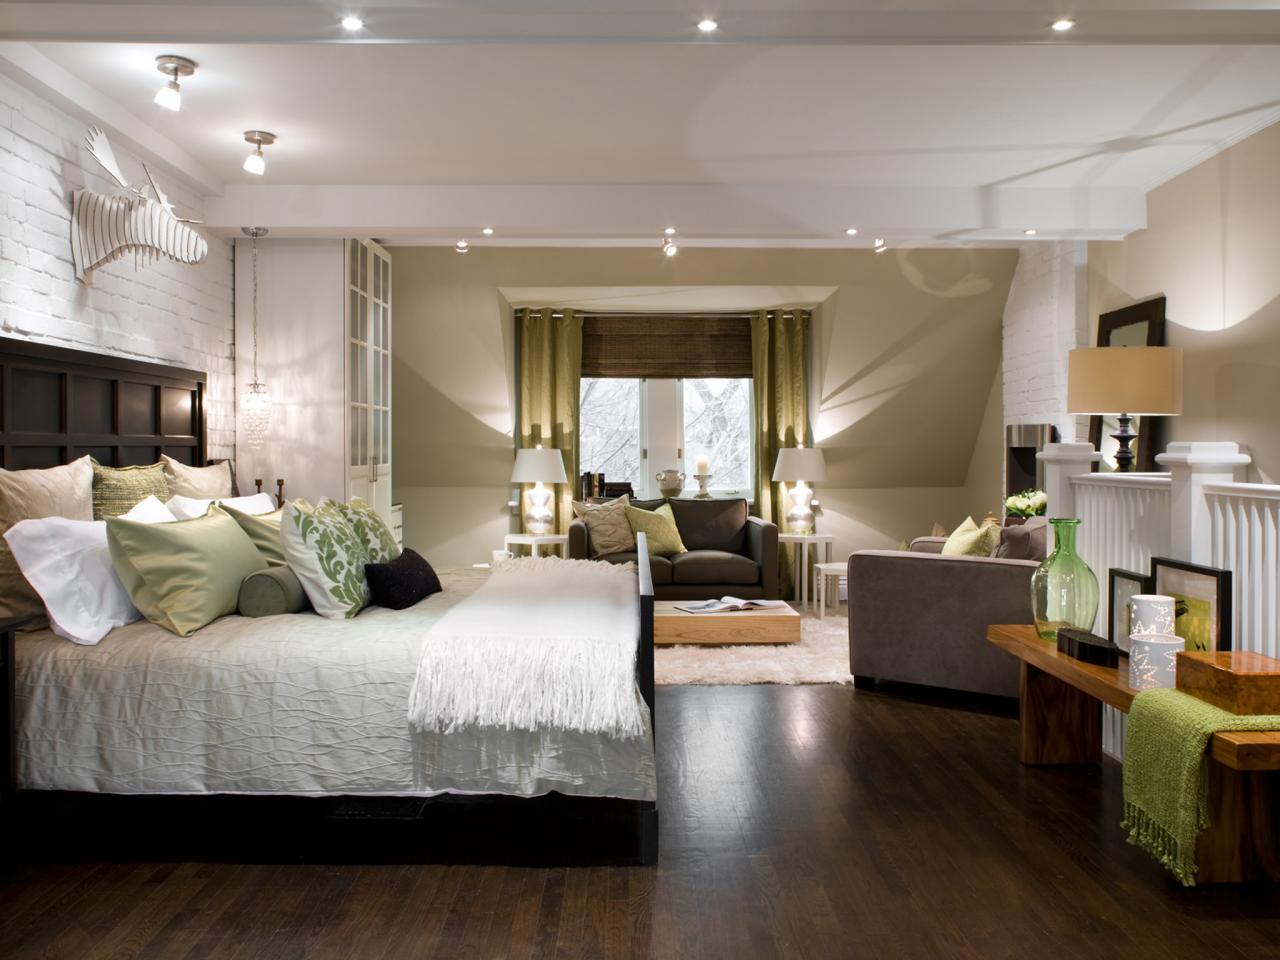 bedroom lighting styles: pictures & design ideas | hgtv